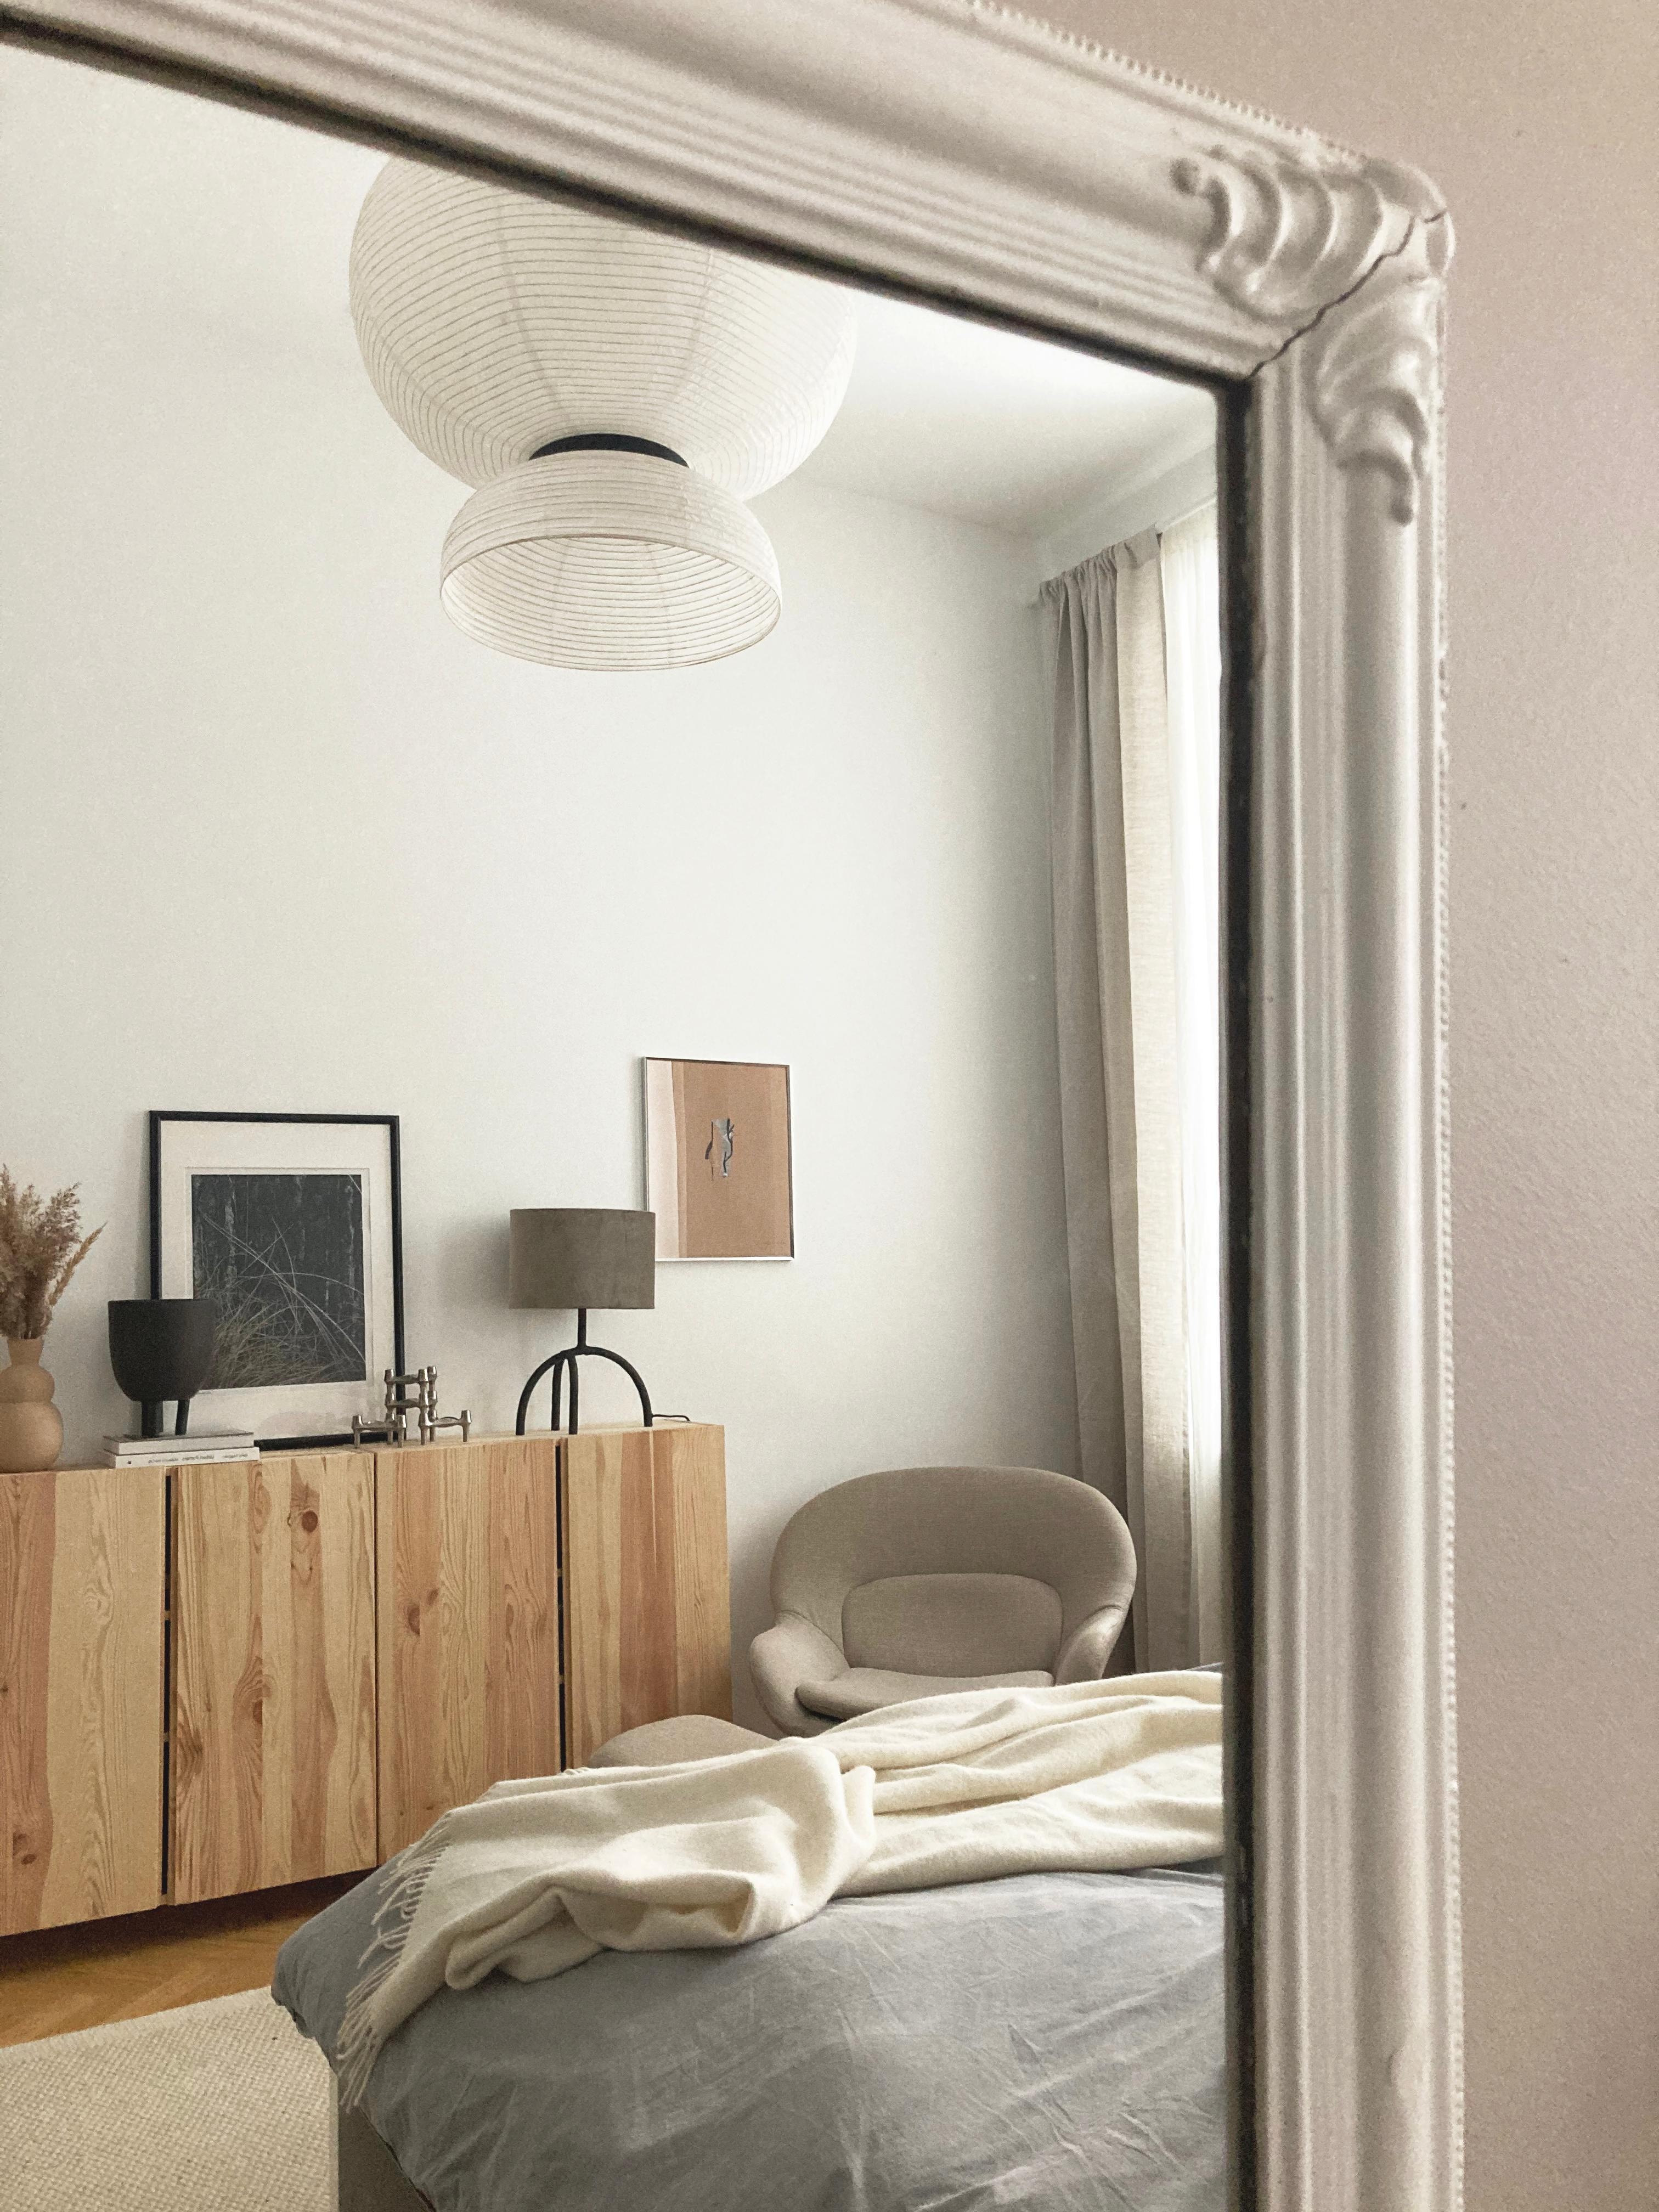 #Schlafzimmer #Schlafzimmerstyling #Schlafzimmerdeko #Skandinavischesdesign